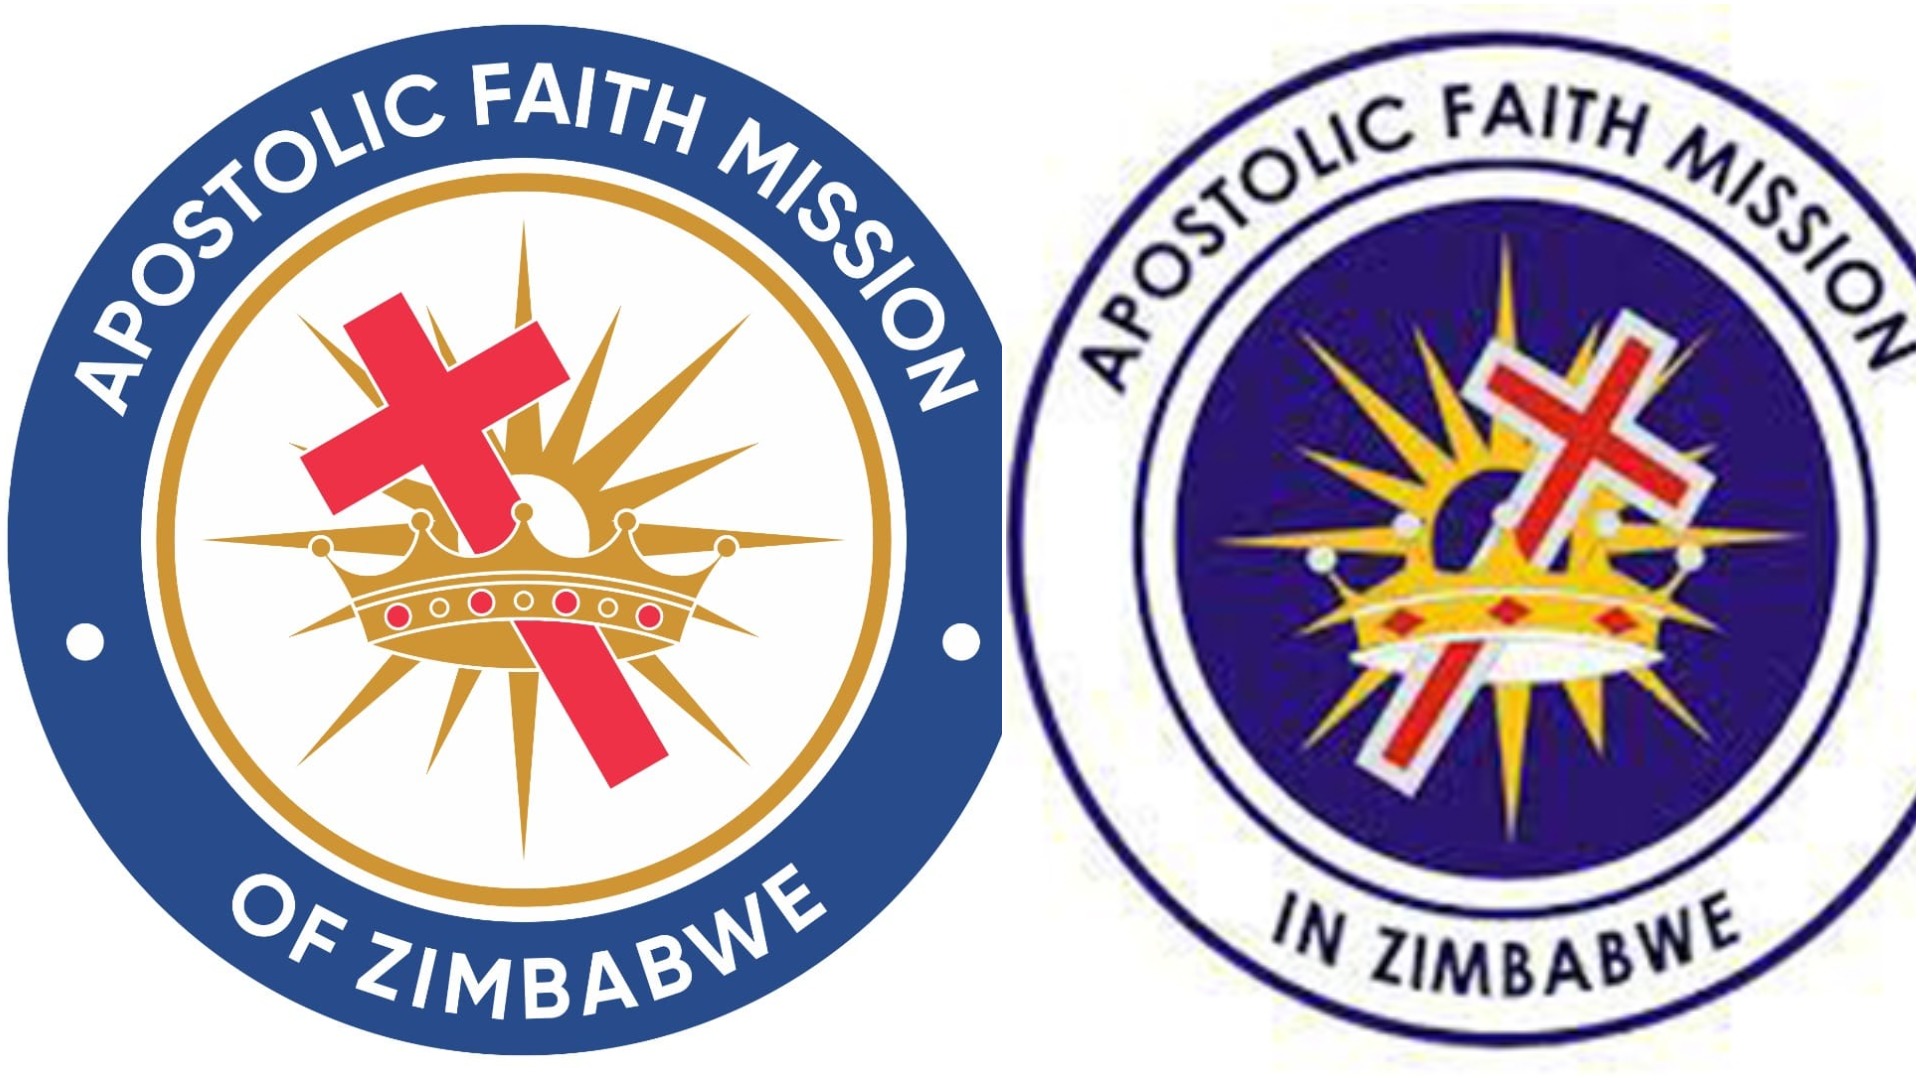 Vanquished AFM Faction Launches Splinter Church "AFM OF Zimbabwe"